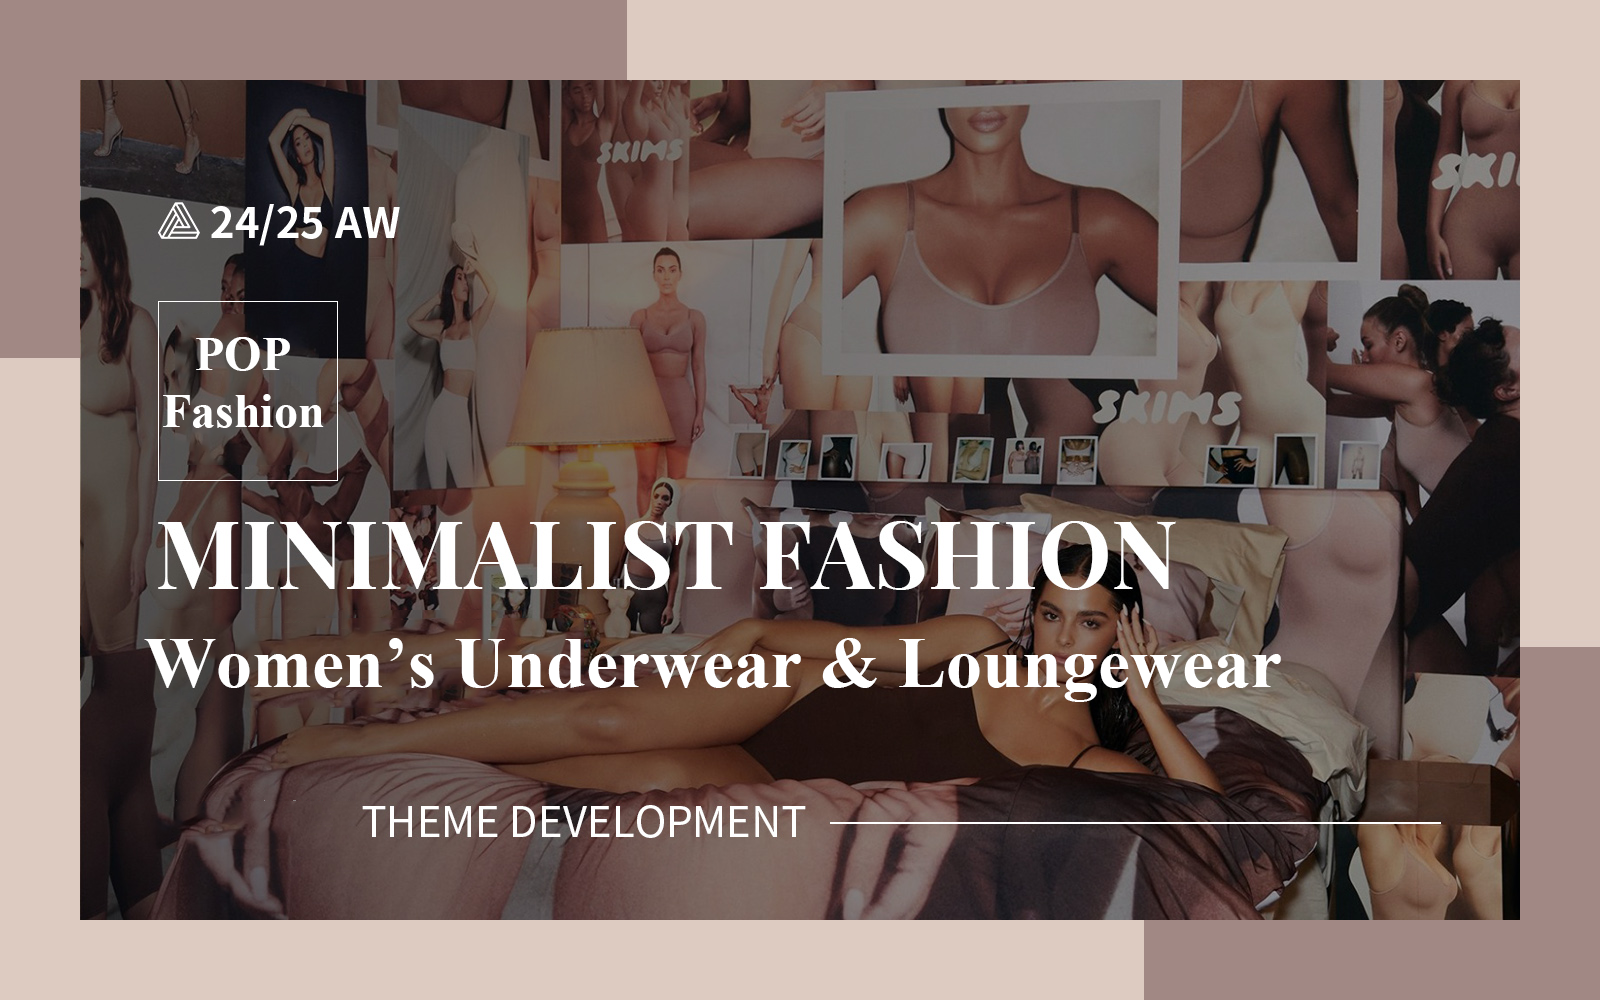 Minimalist Fashion -- The Design Development of Women's Underwear & Loungewear